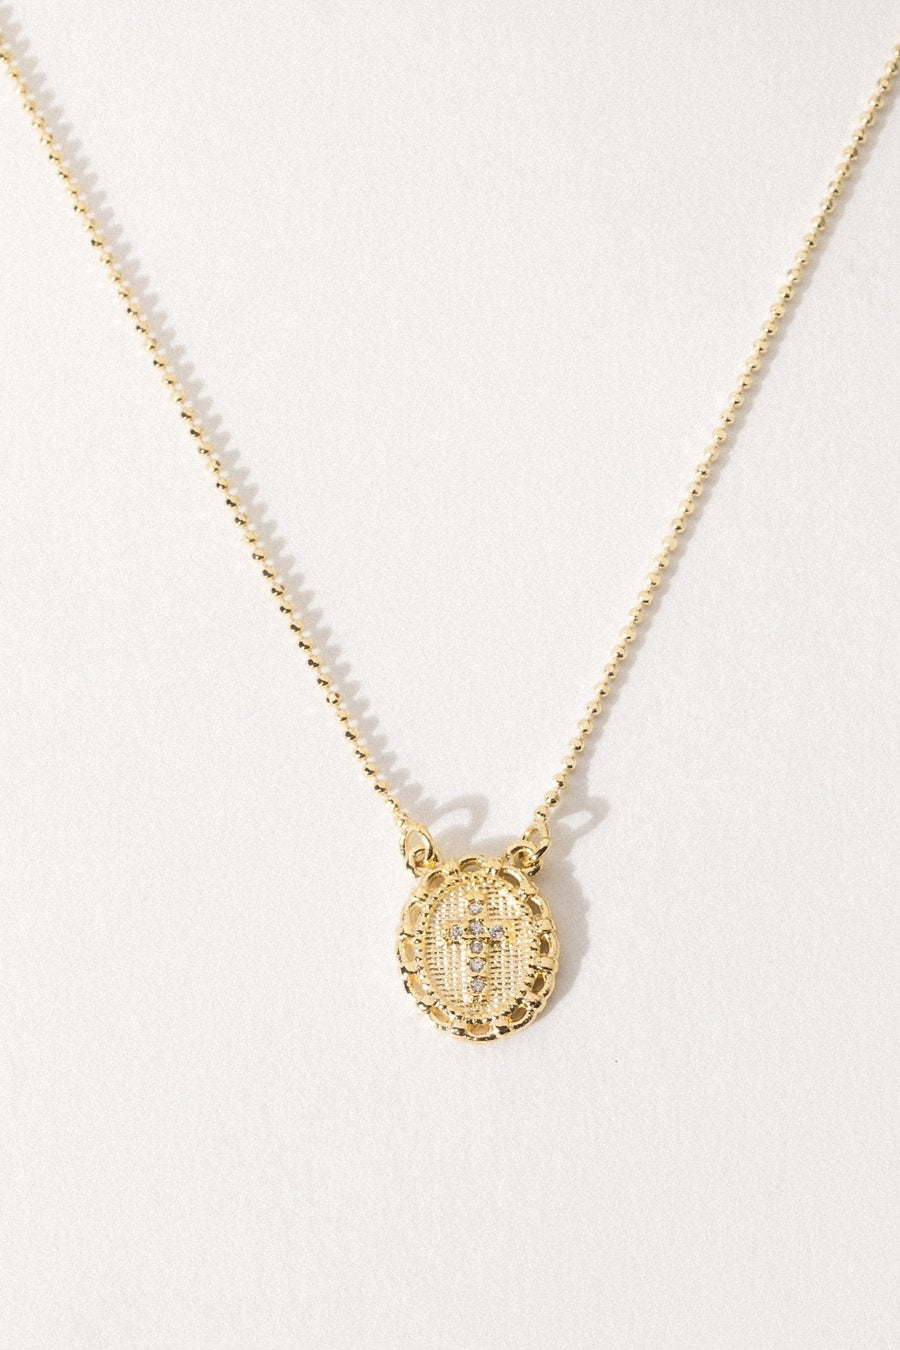 Dona Italia Jewelry Gold / 16 Inches nCW114